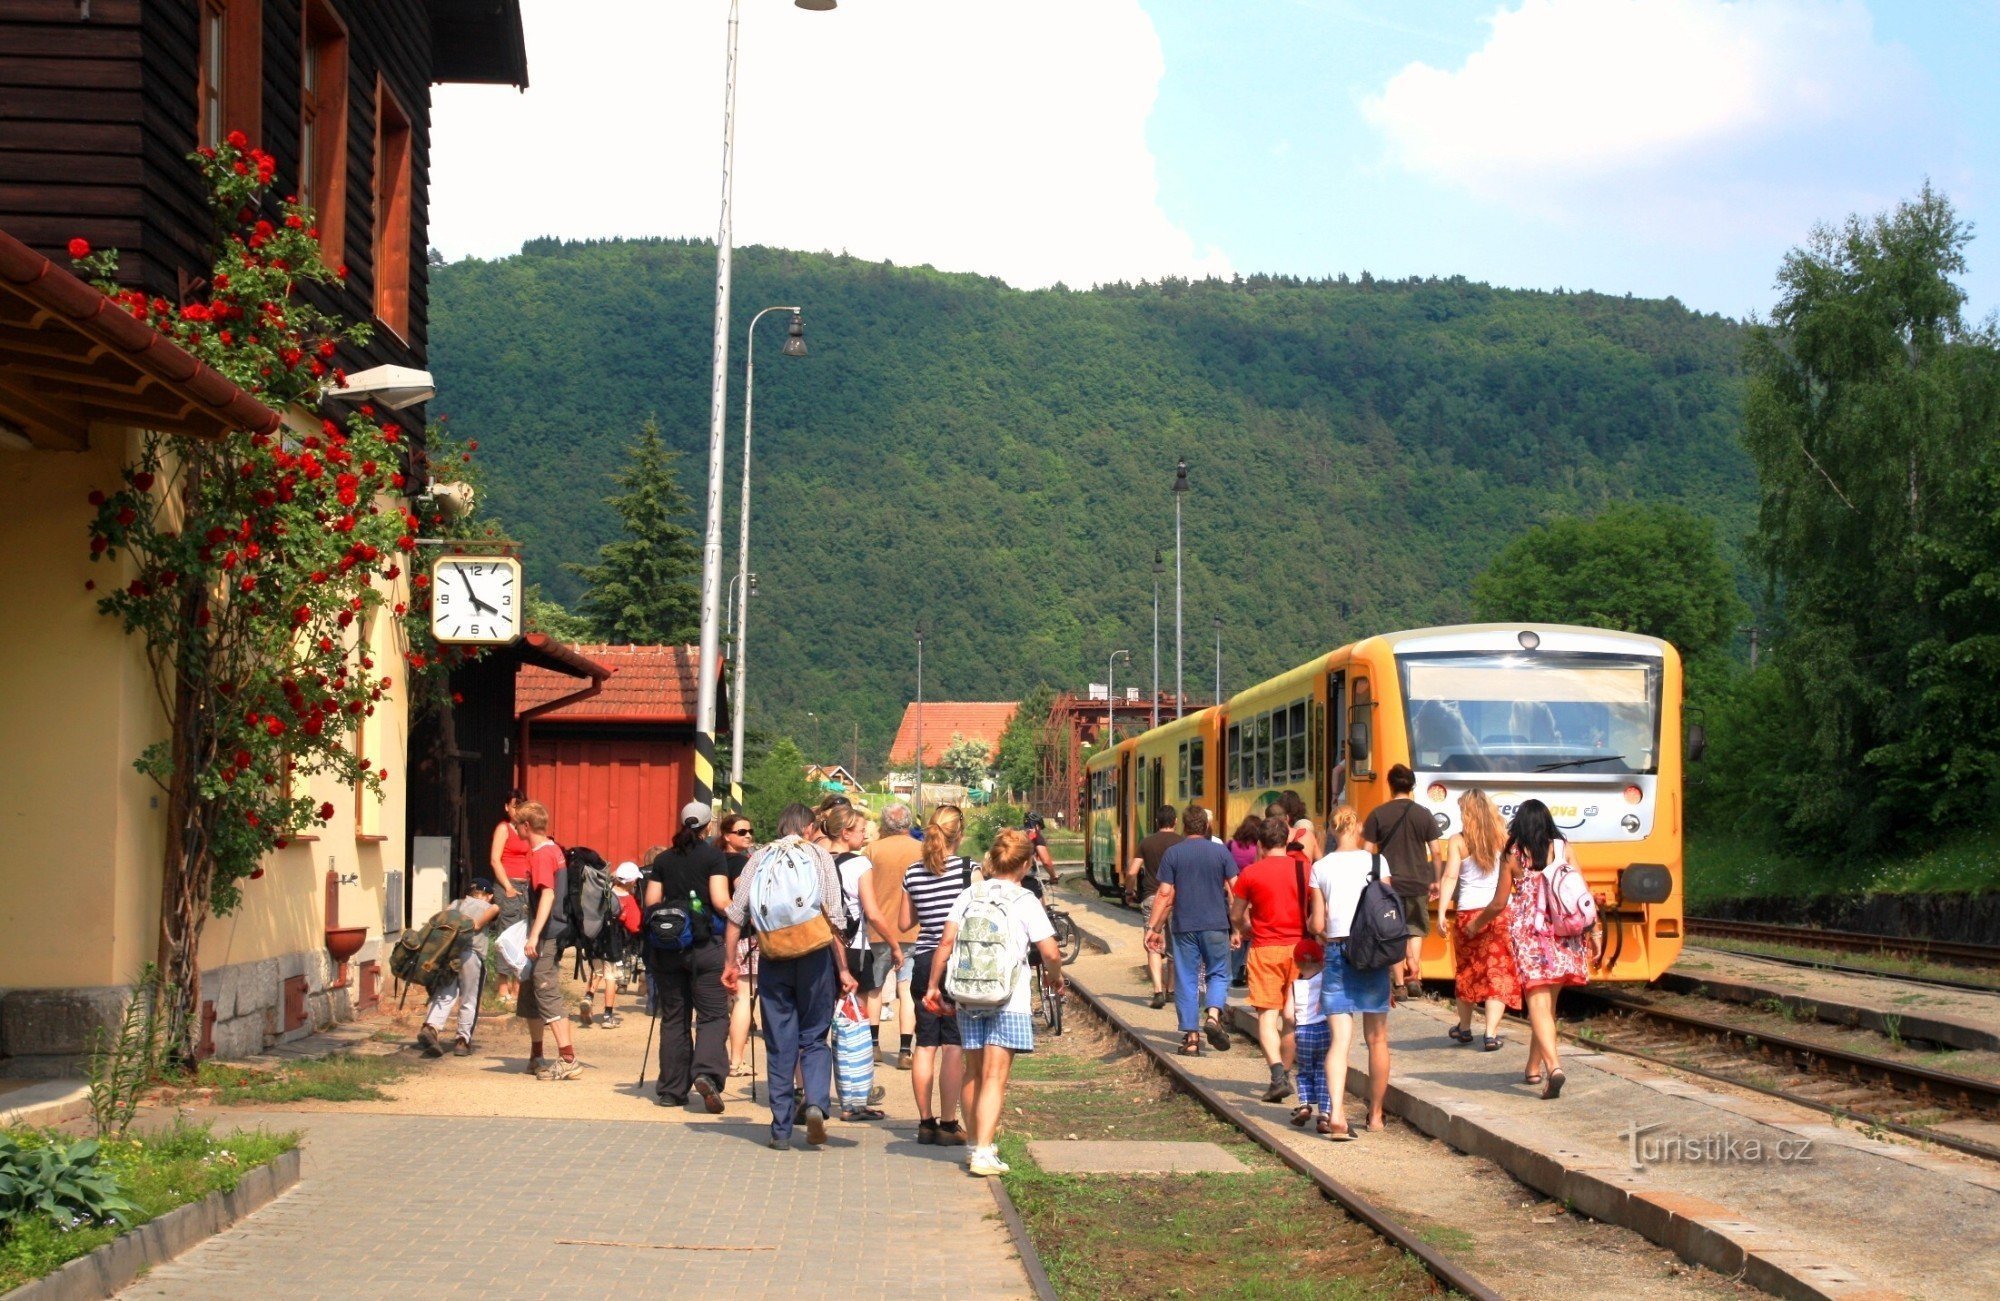 Nedvedice - 火车站